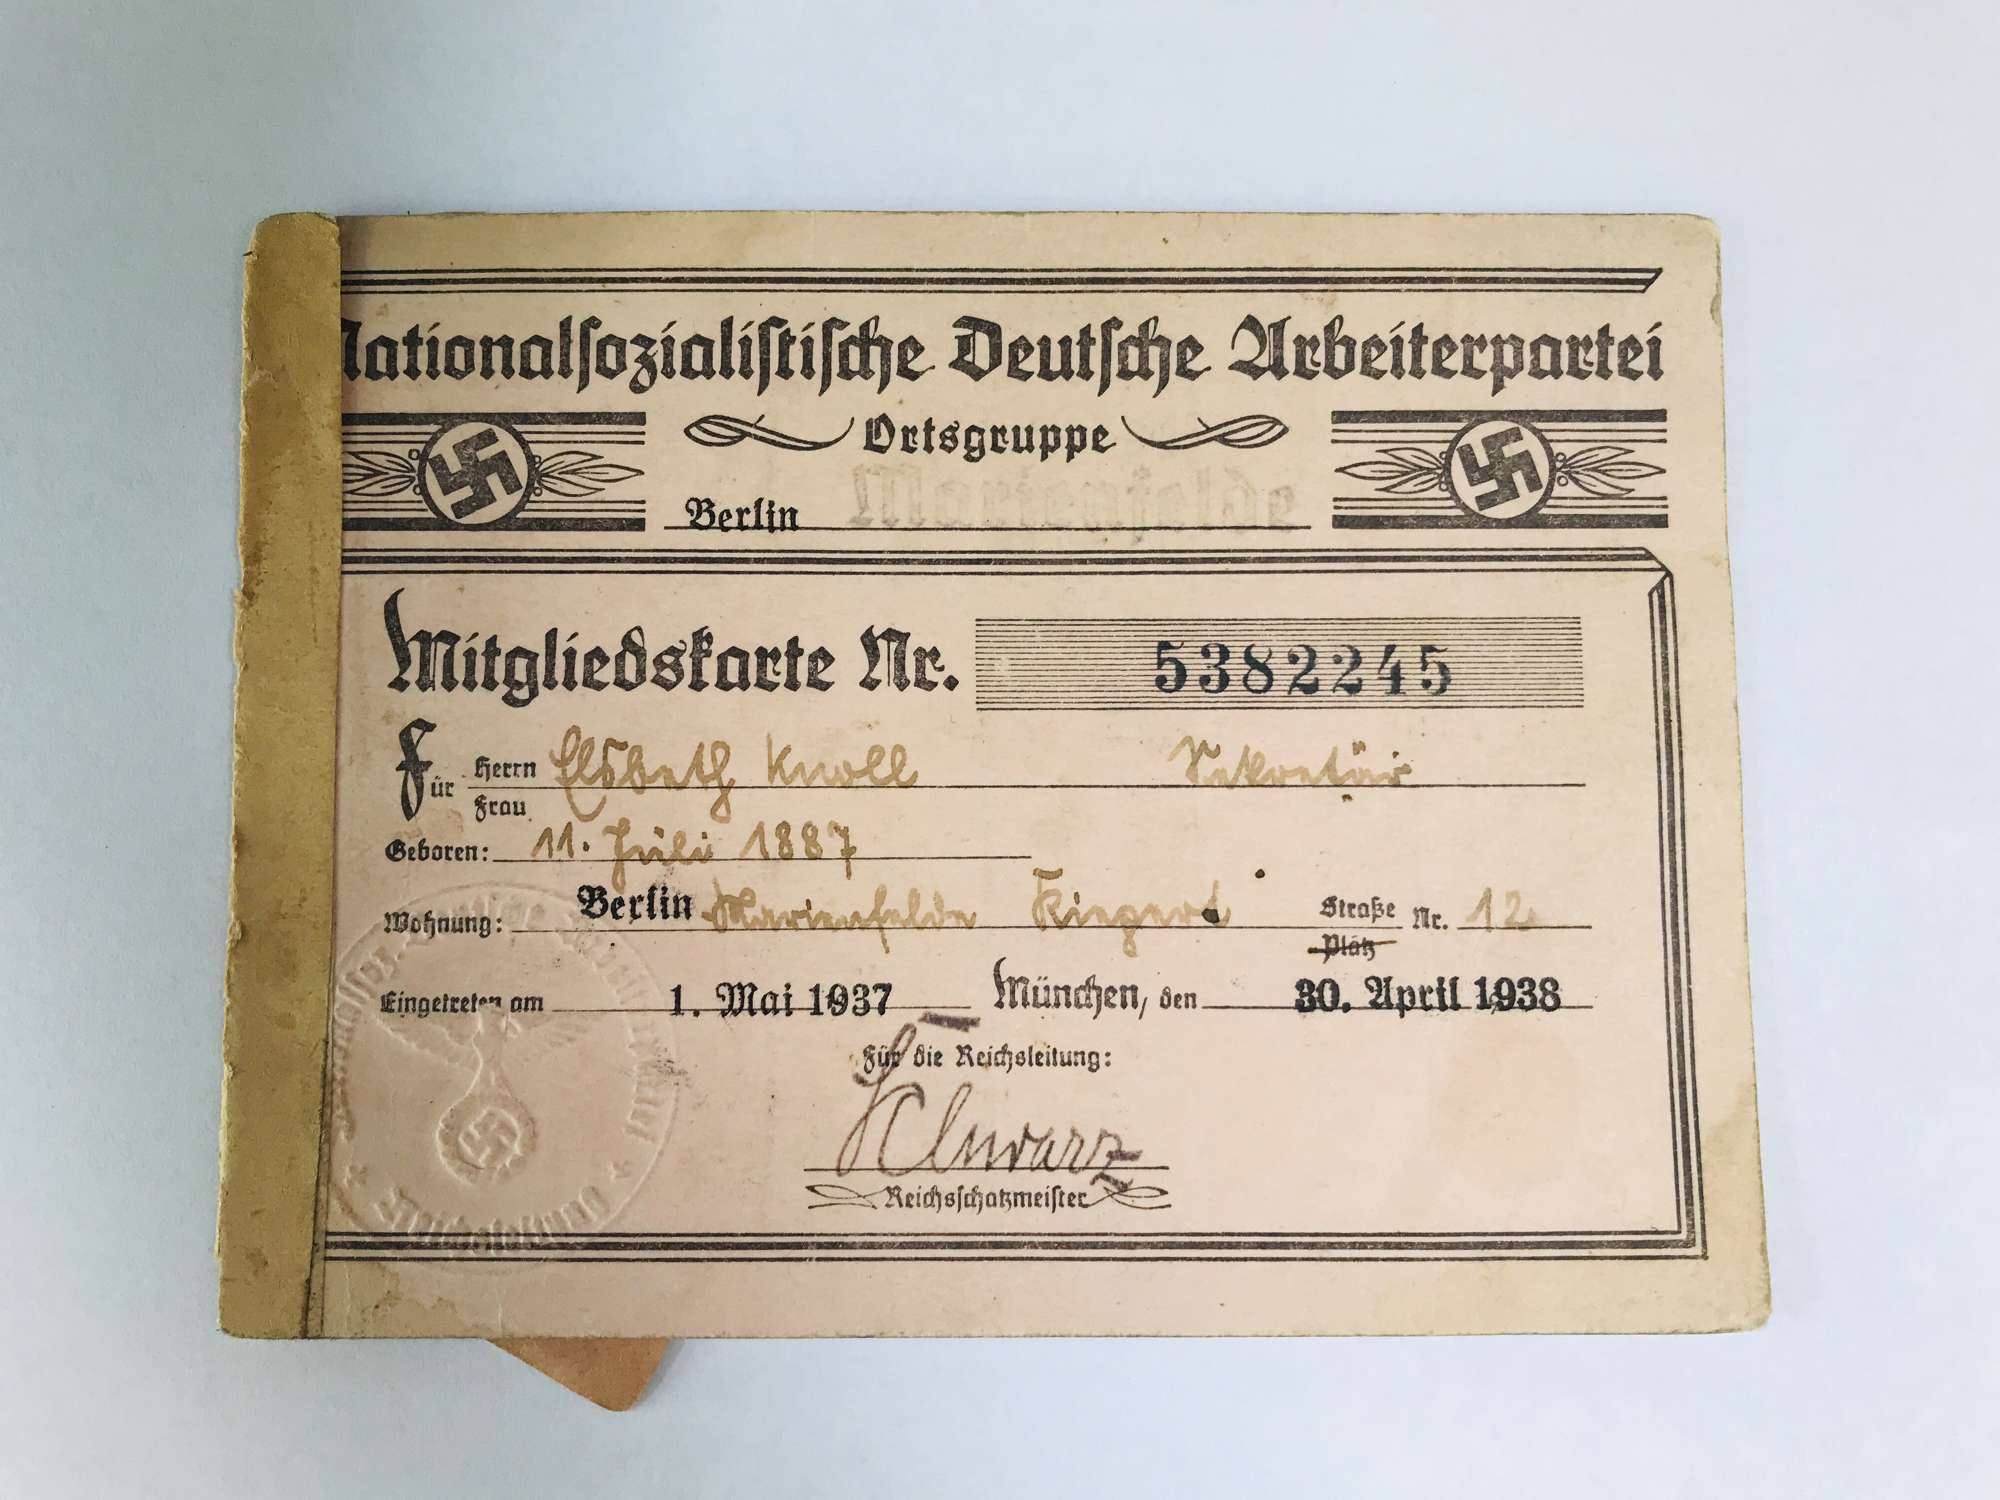 Membership card to a female NSDAP